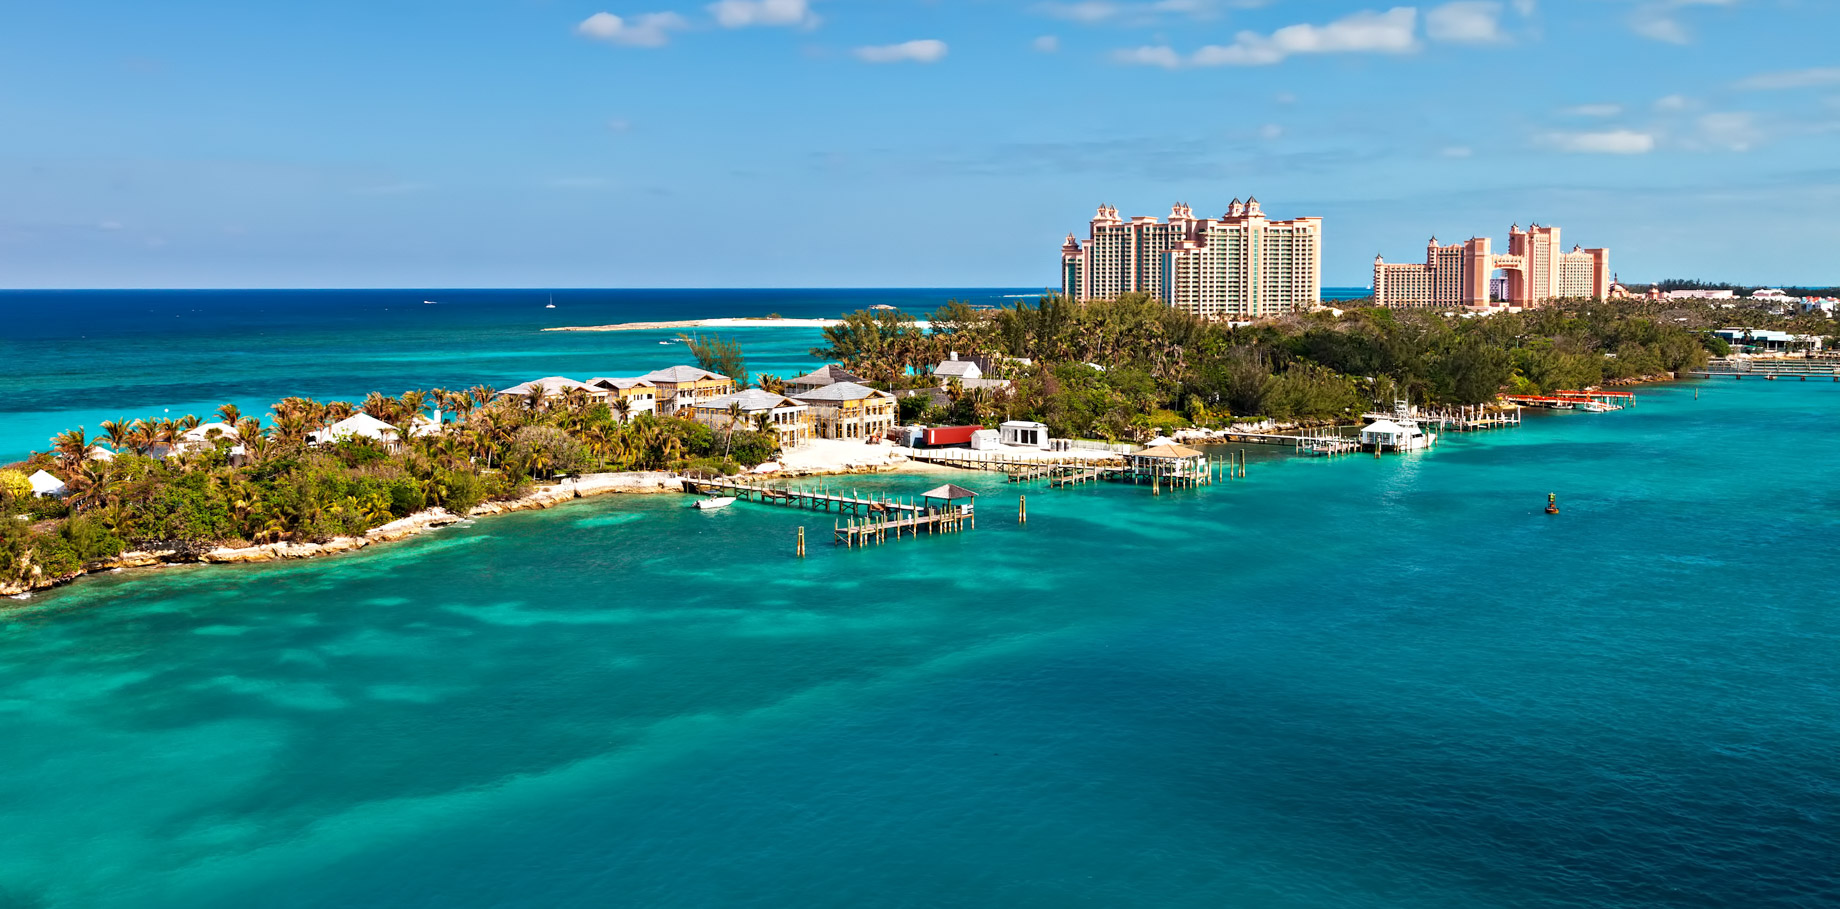 Atlantis Residences on Paradise Island in the Bahamas